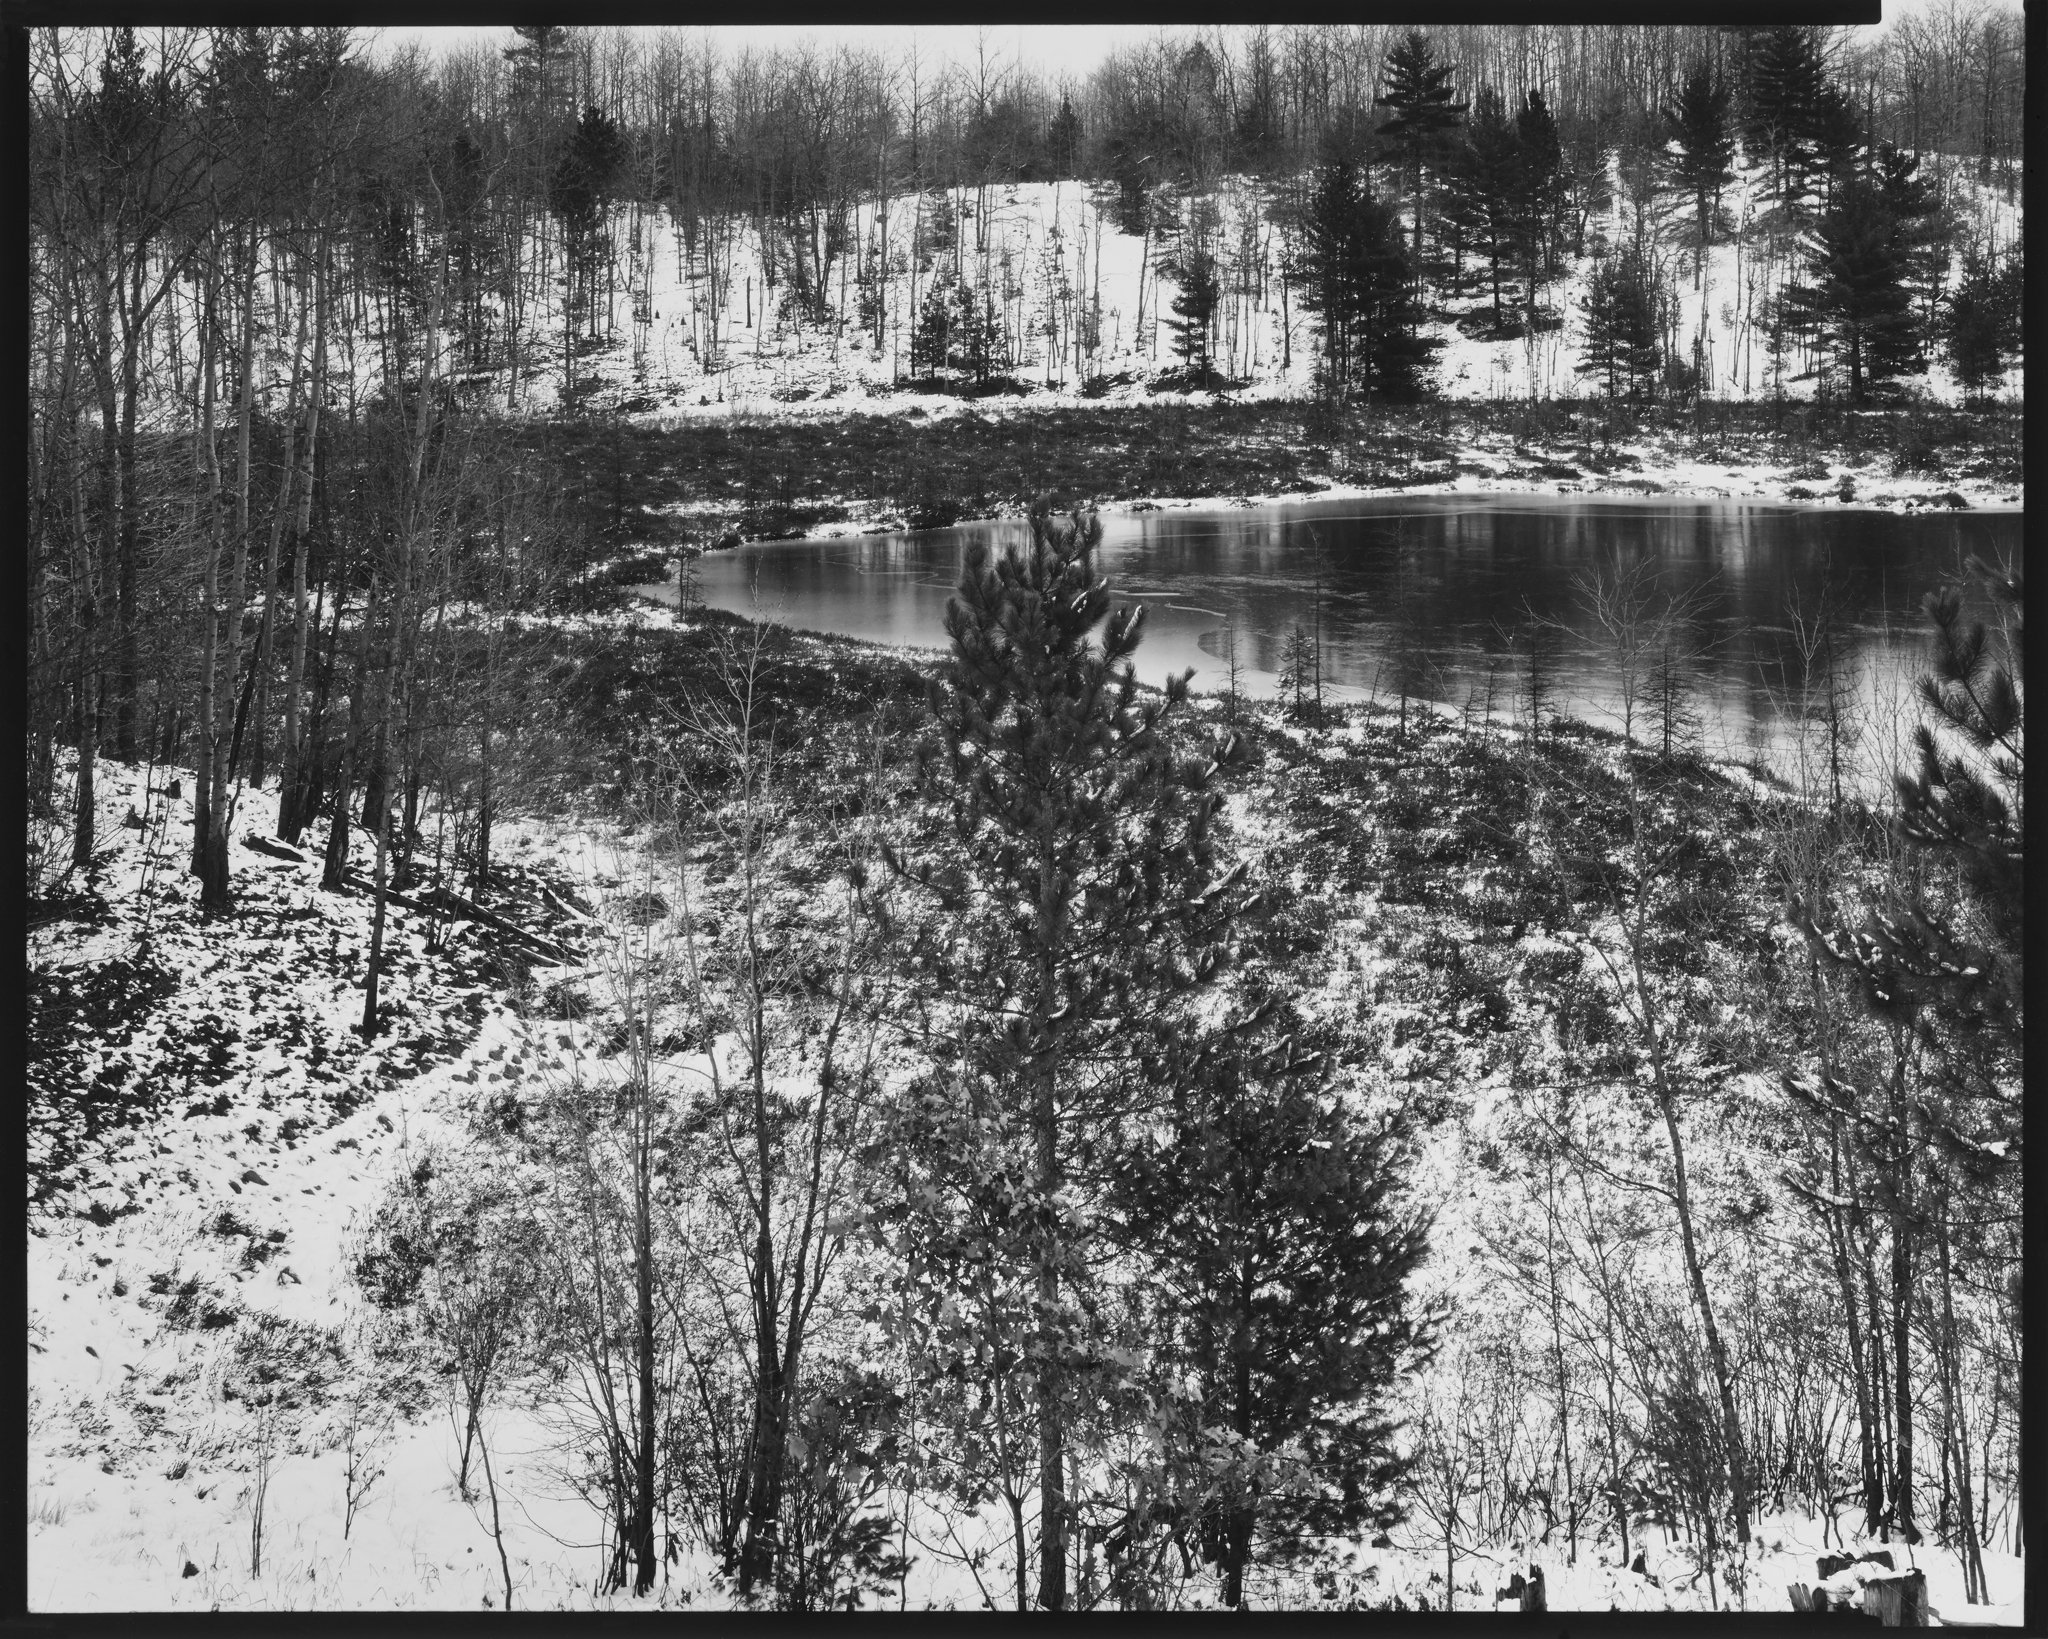 American Landscapes Portfolio_Winter Pond with First Ice, Michigan_1981 © Nick Merrick.jpg